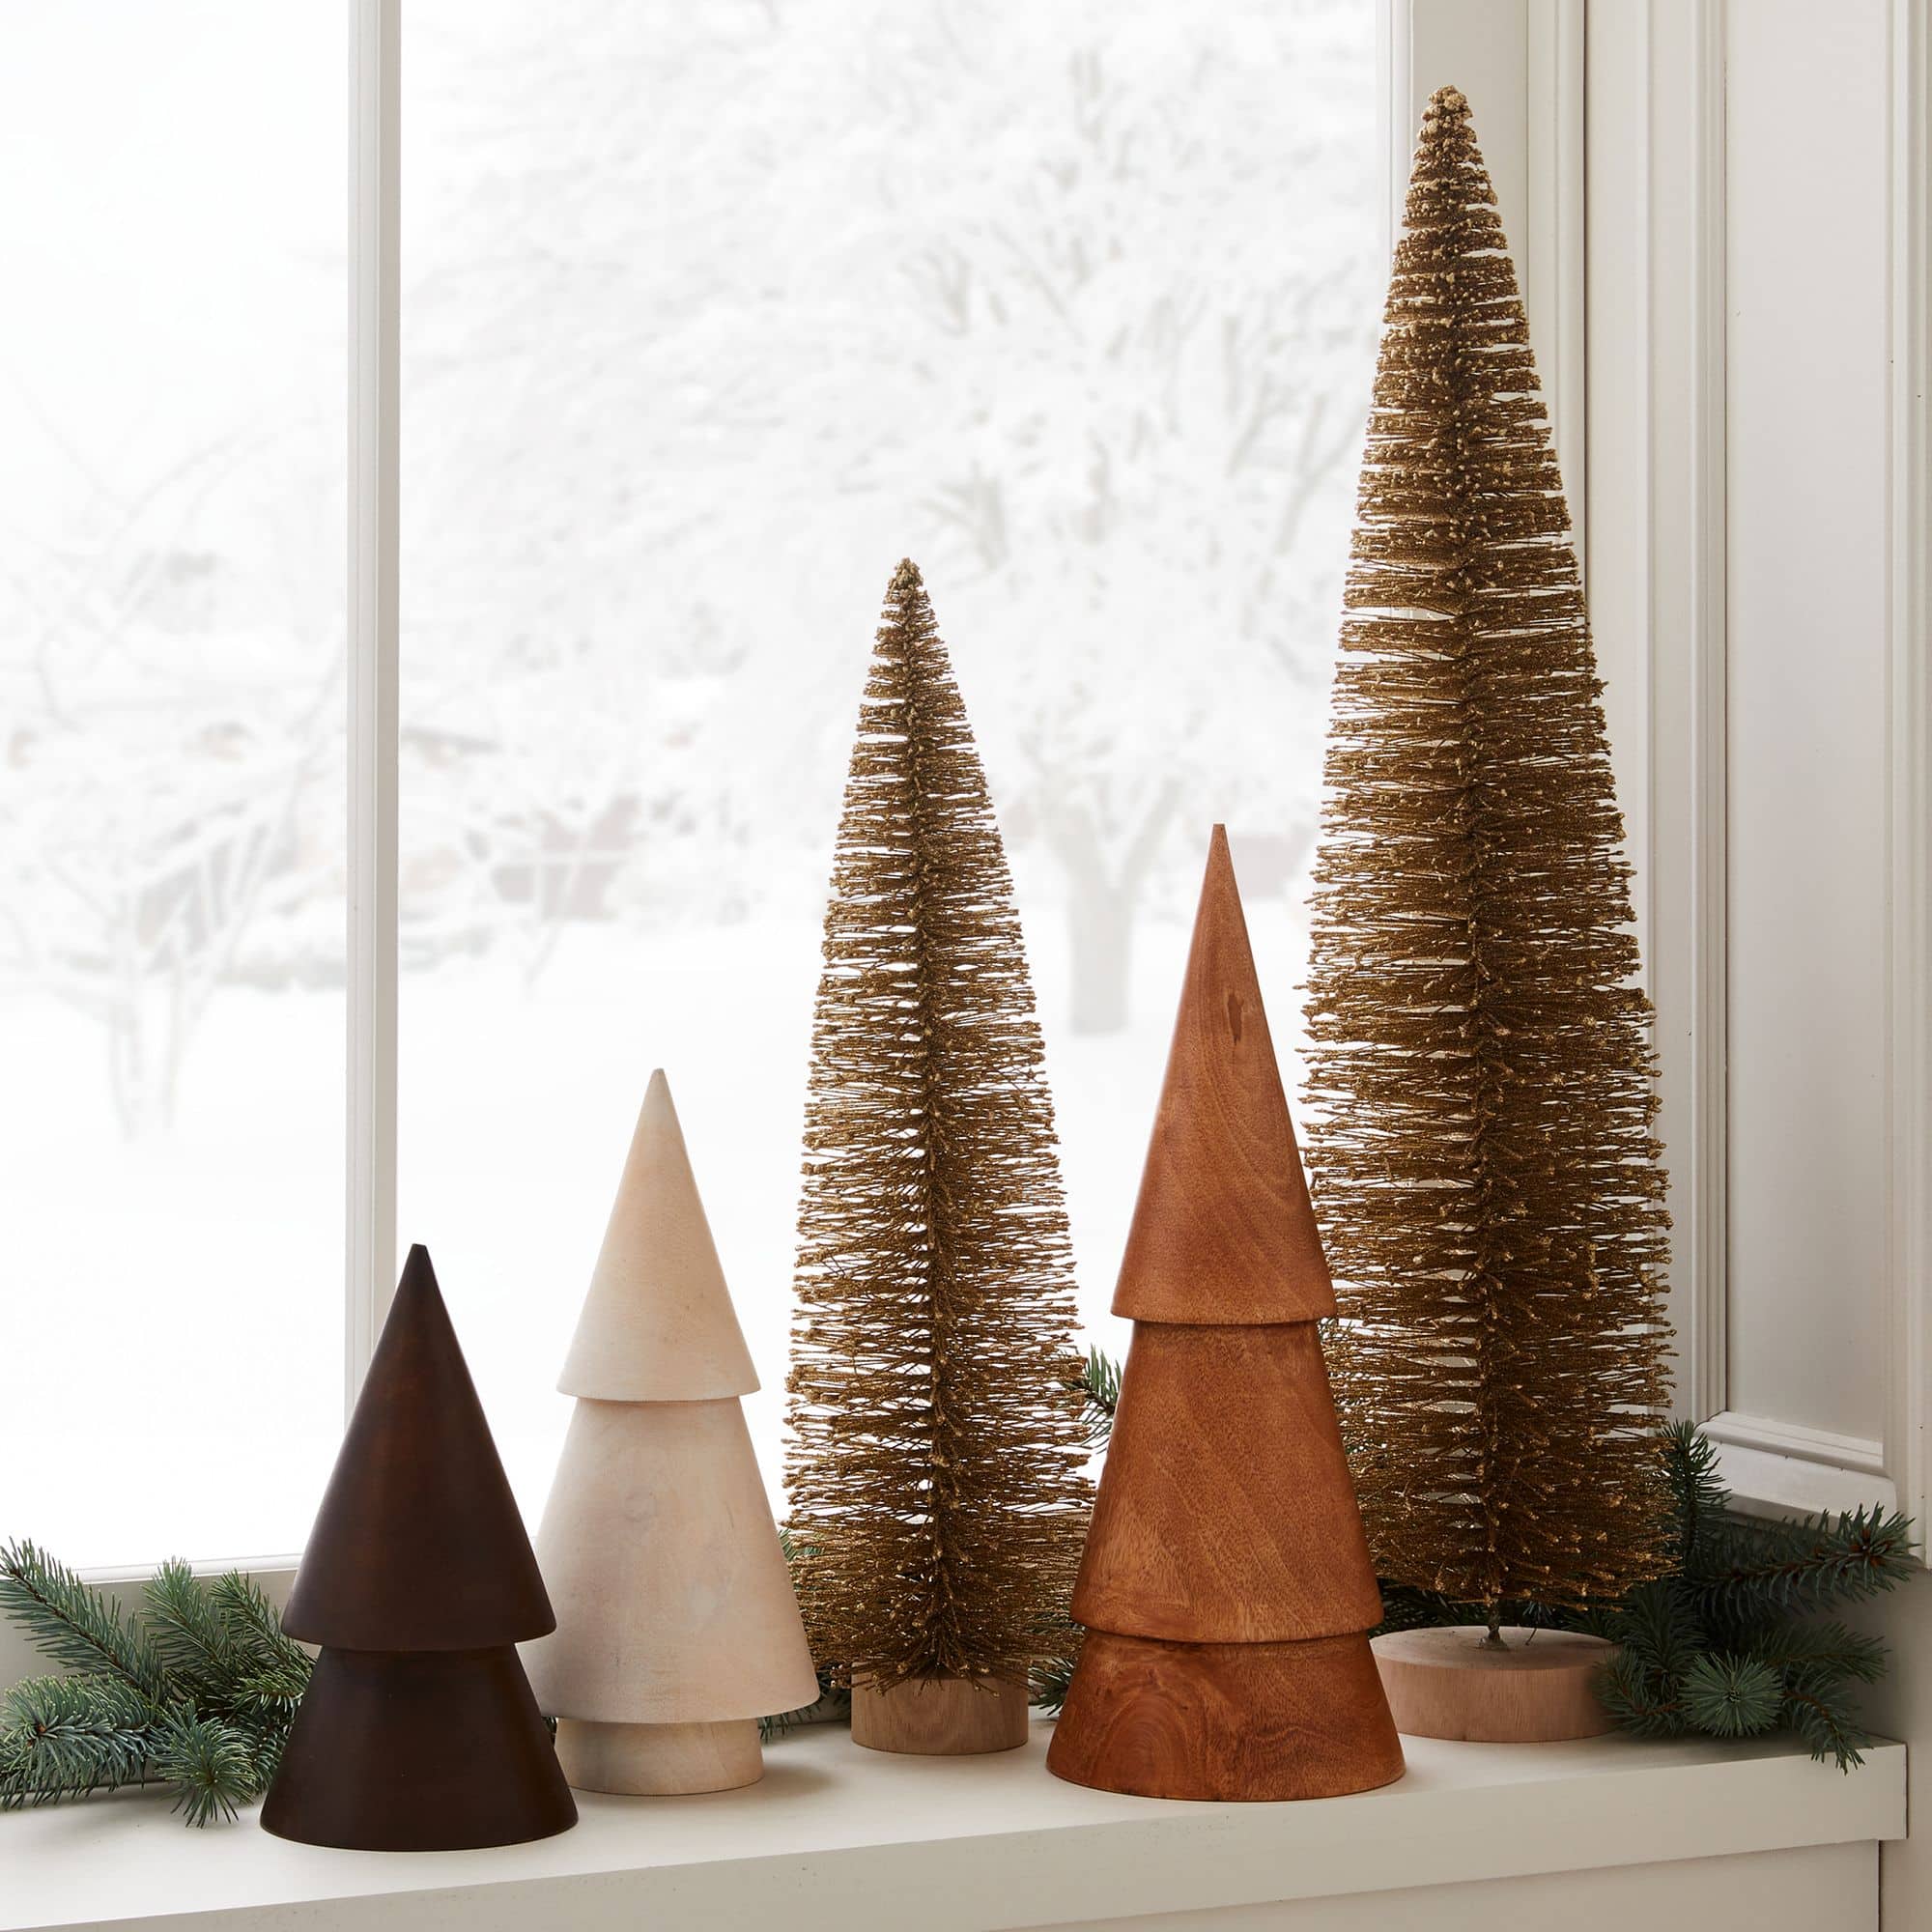 Tiny stacked wood Christmas trees